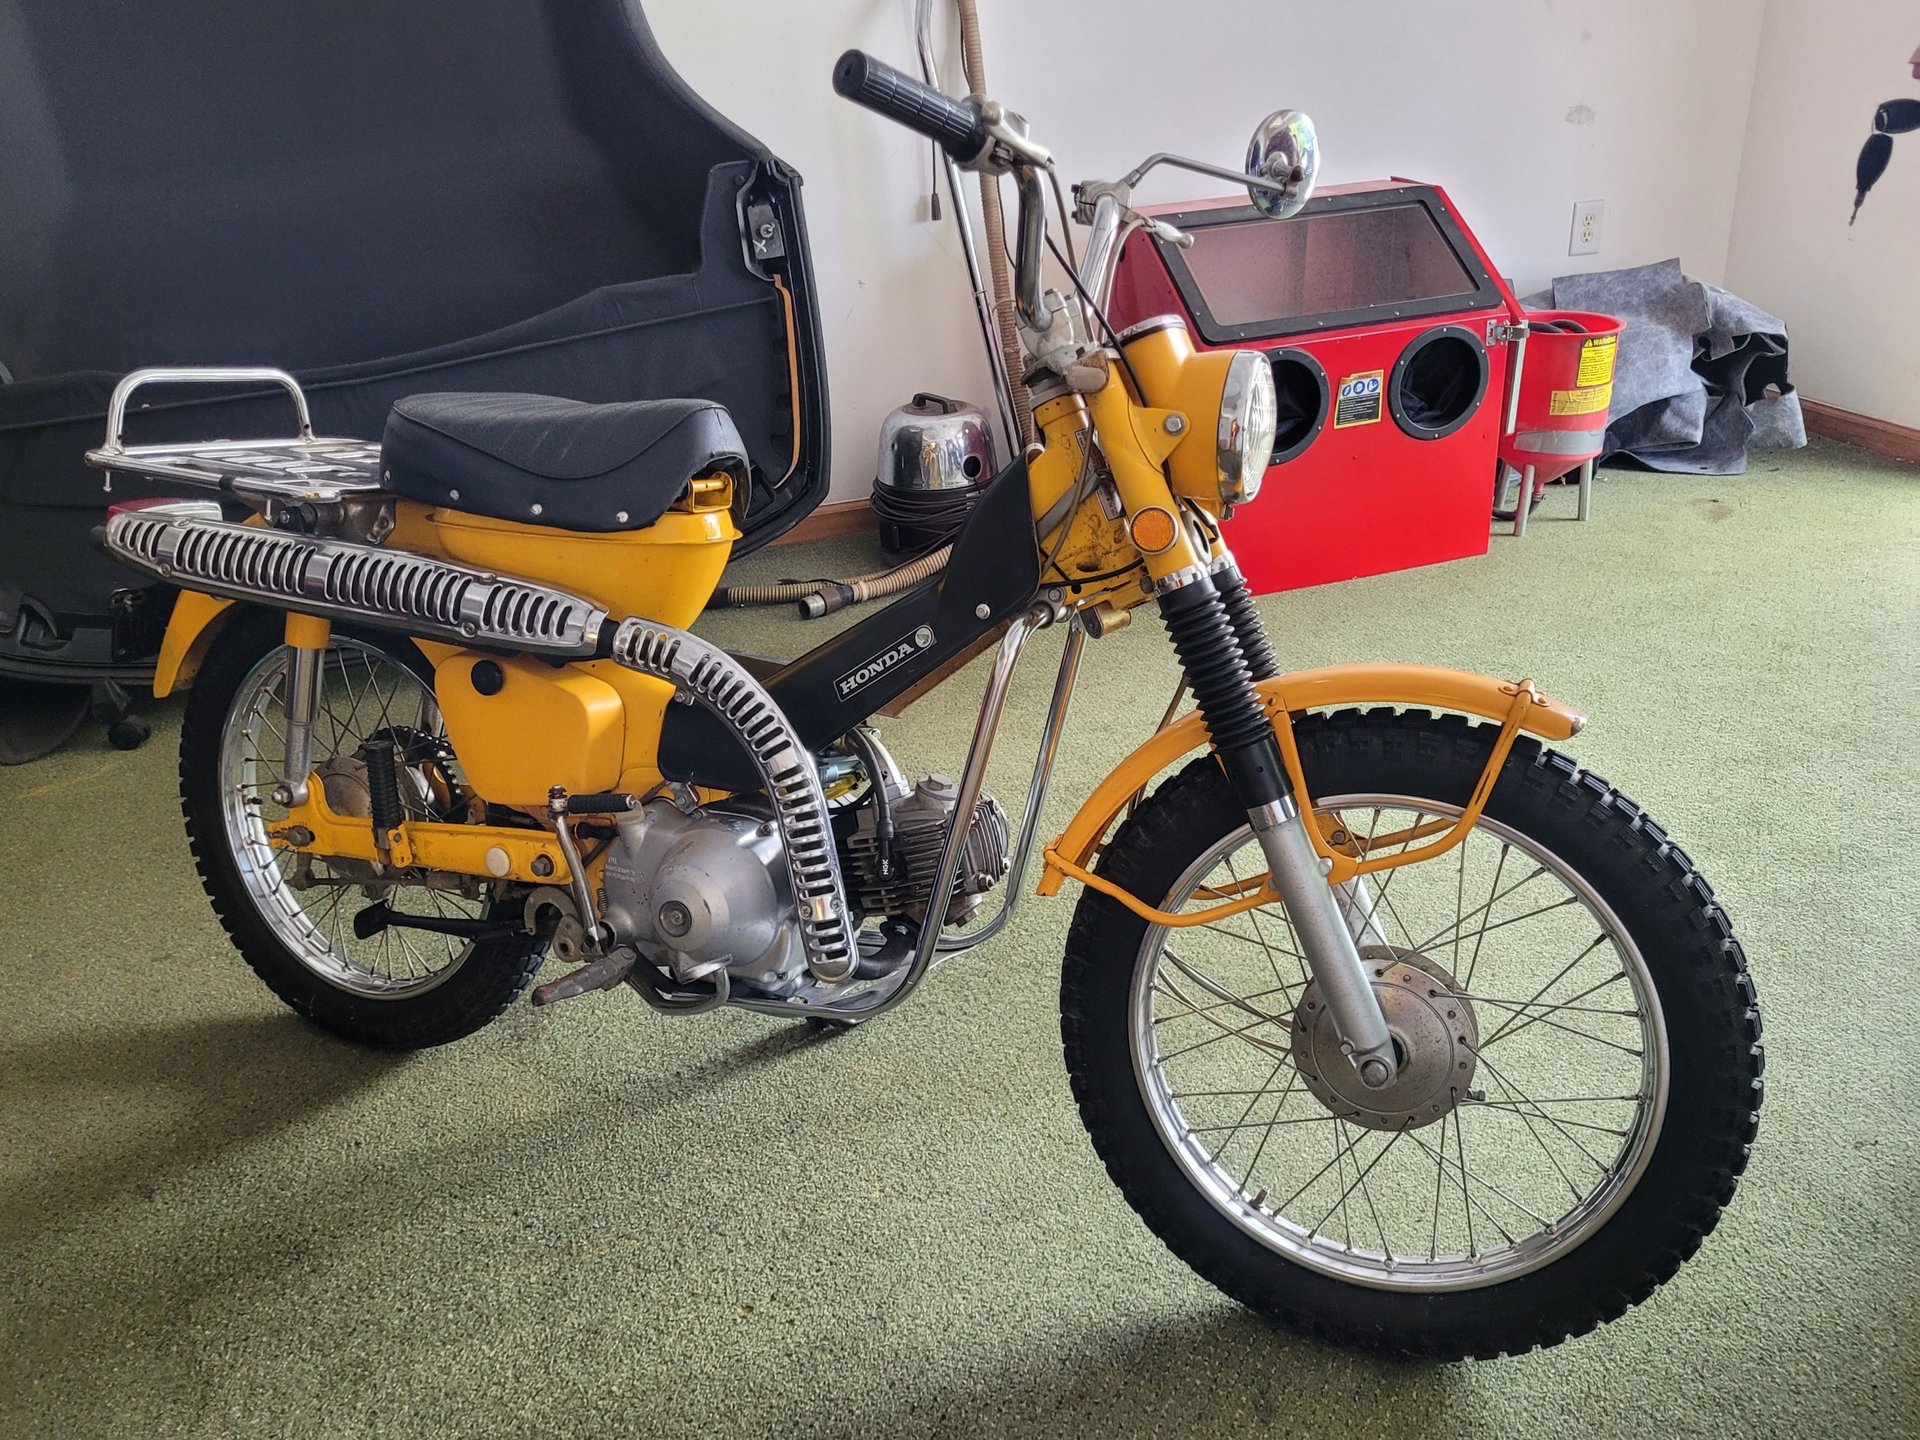 Collectible item 1970 honda ct90 motorcycle